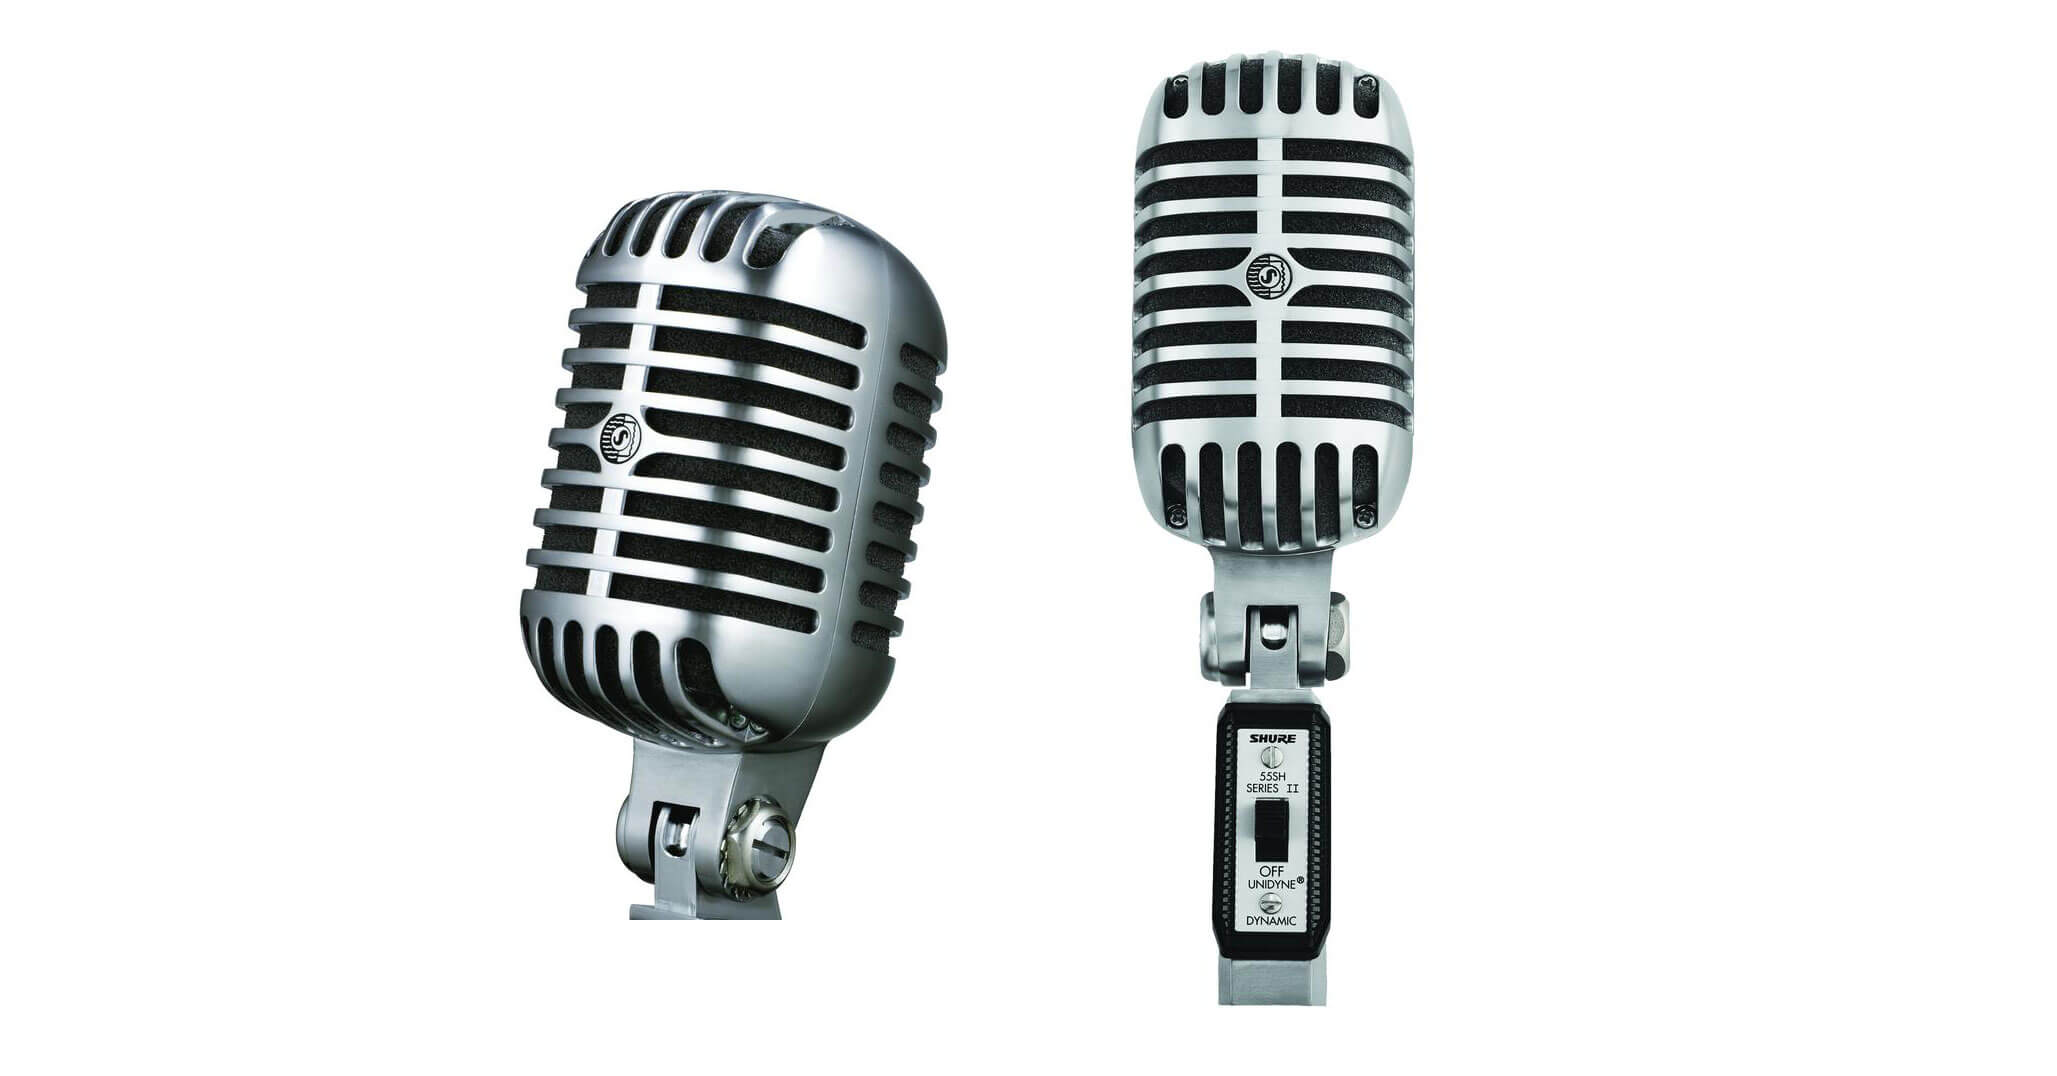 Unidyne I Model 55 Microphone by Shure Inc.